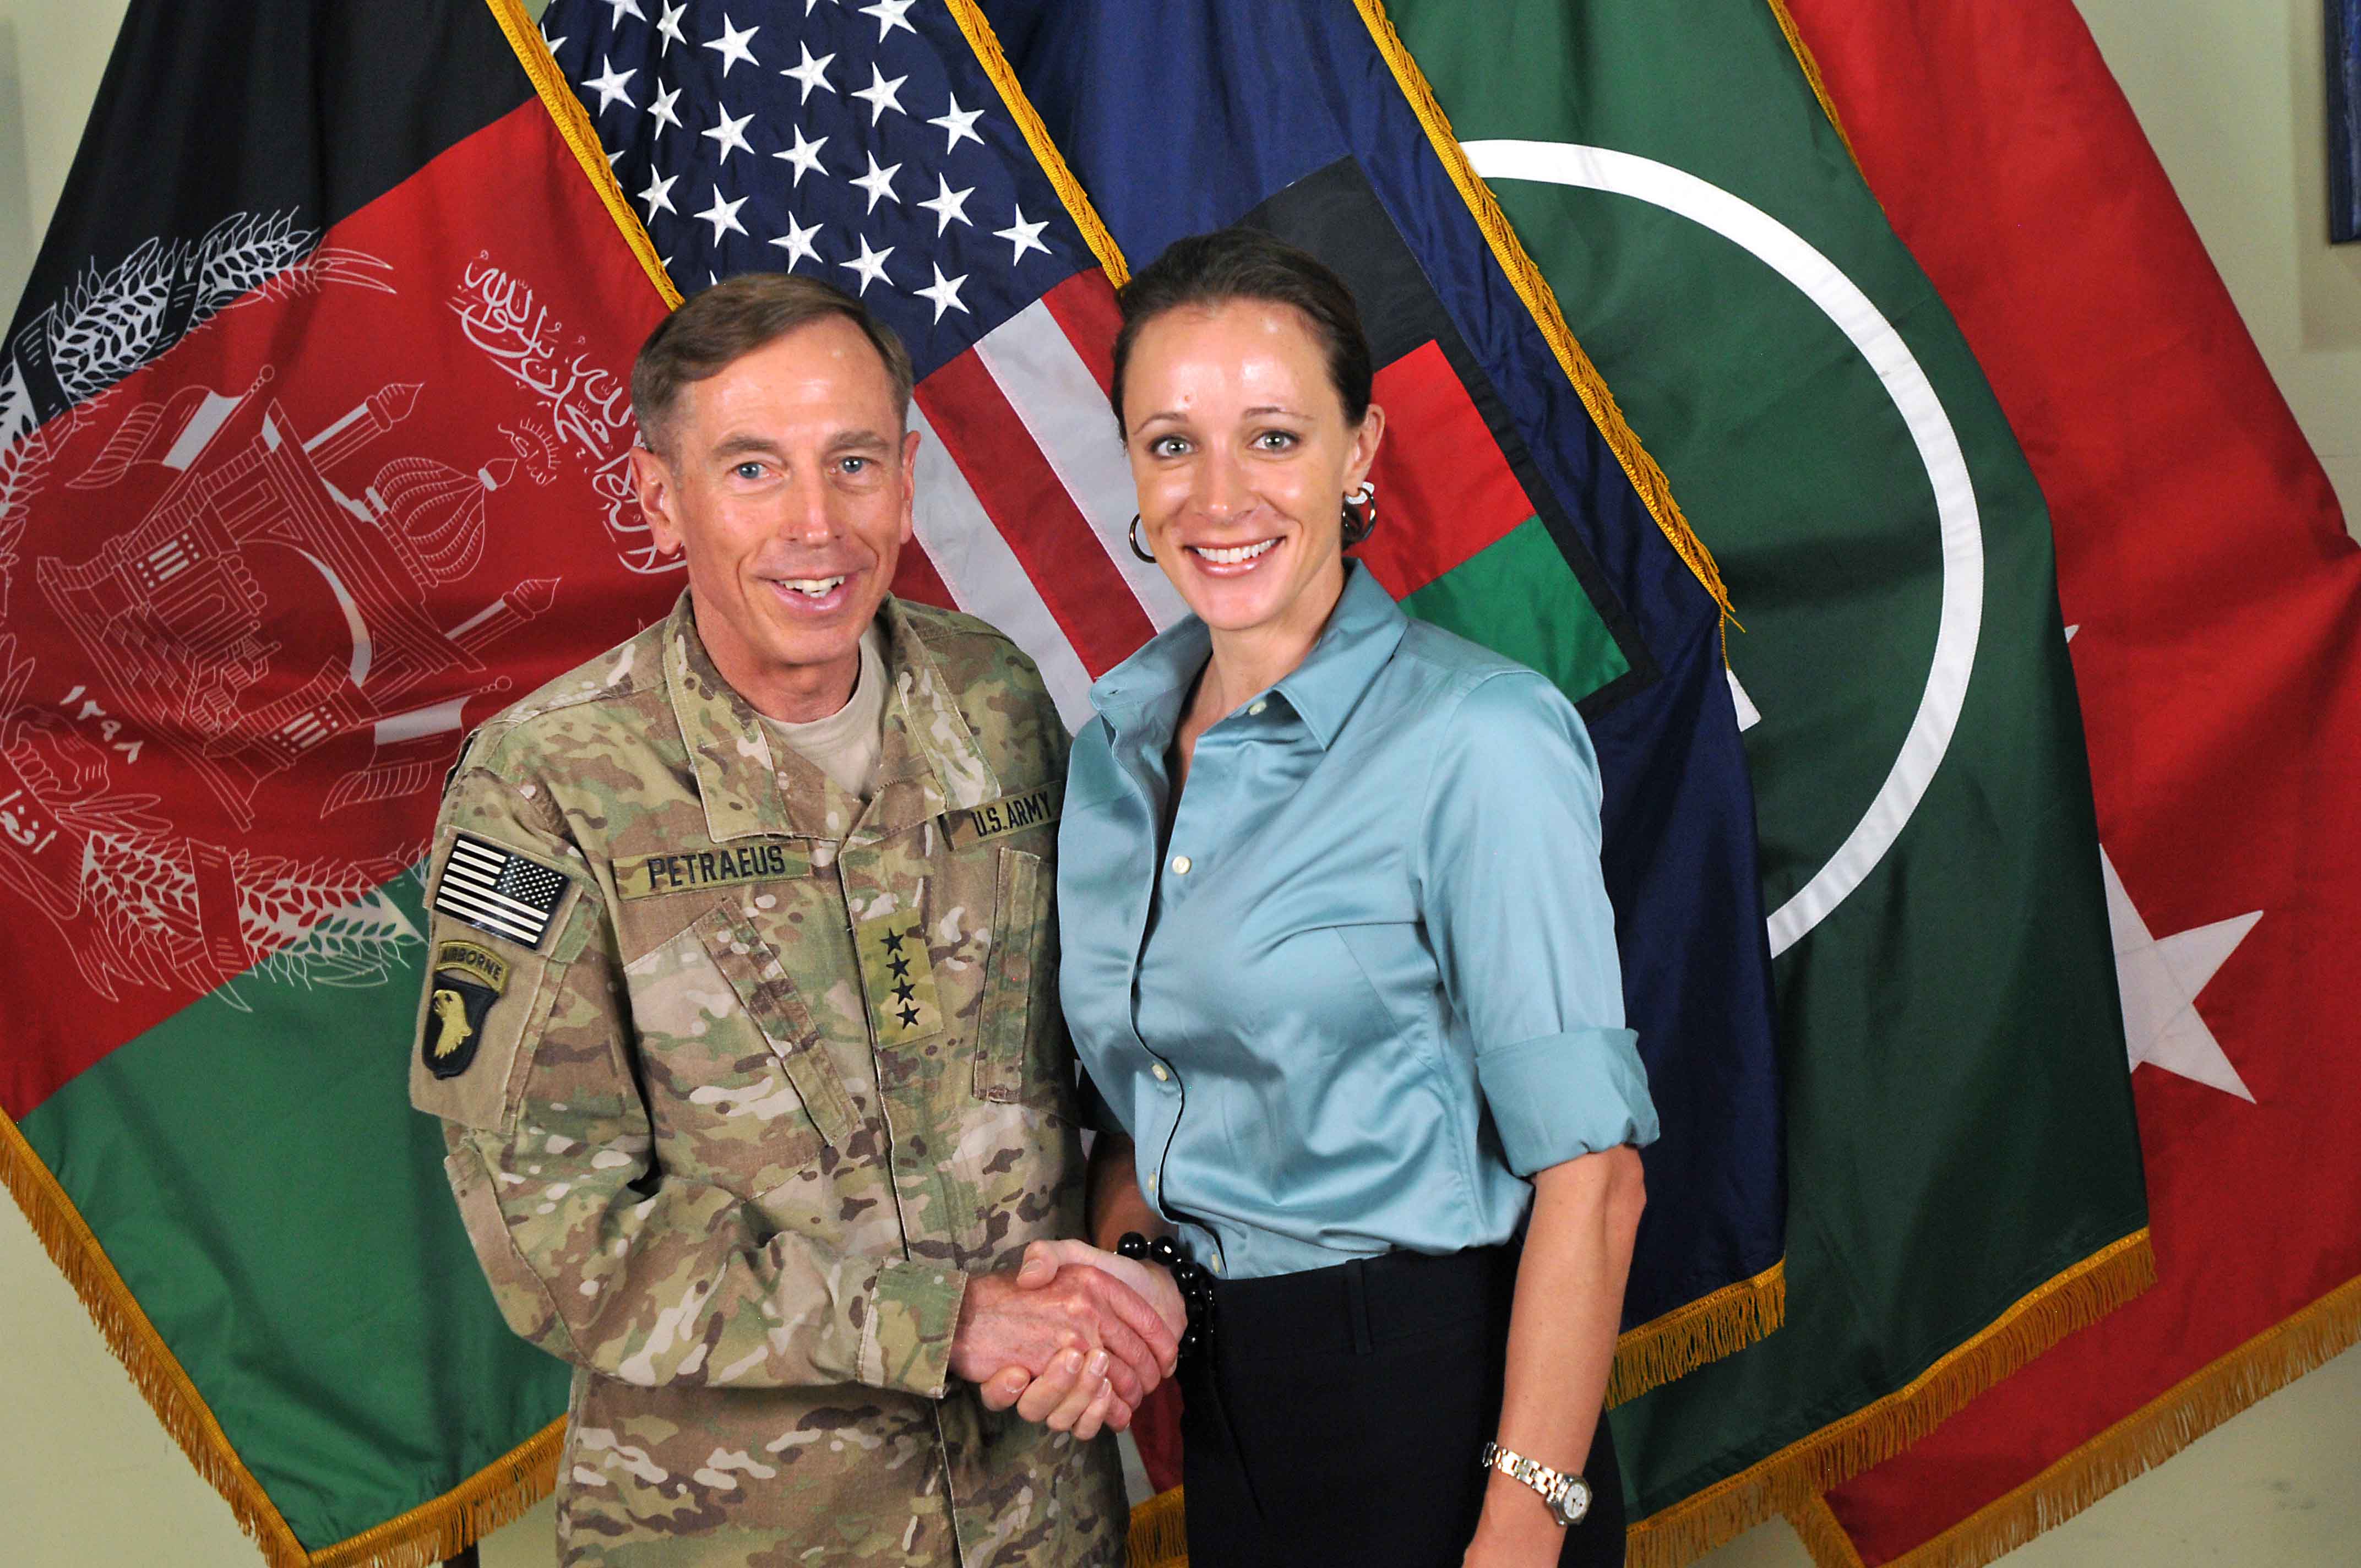 CIA Director Gen. David Petraeus Resigns After Affair with Paula Broadwell